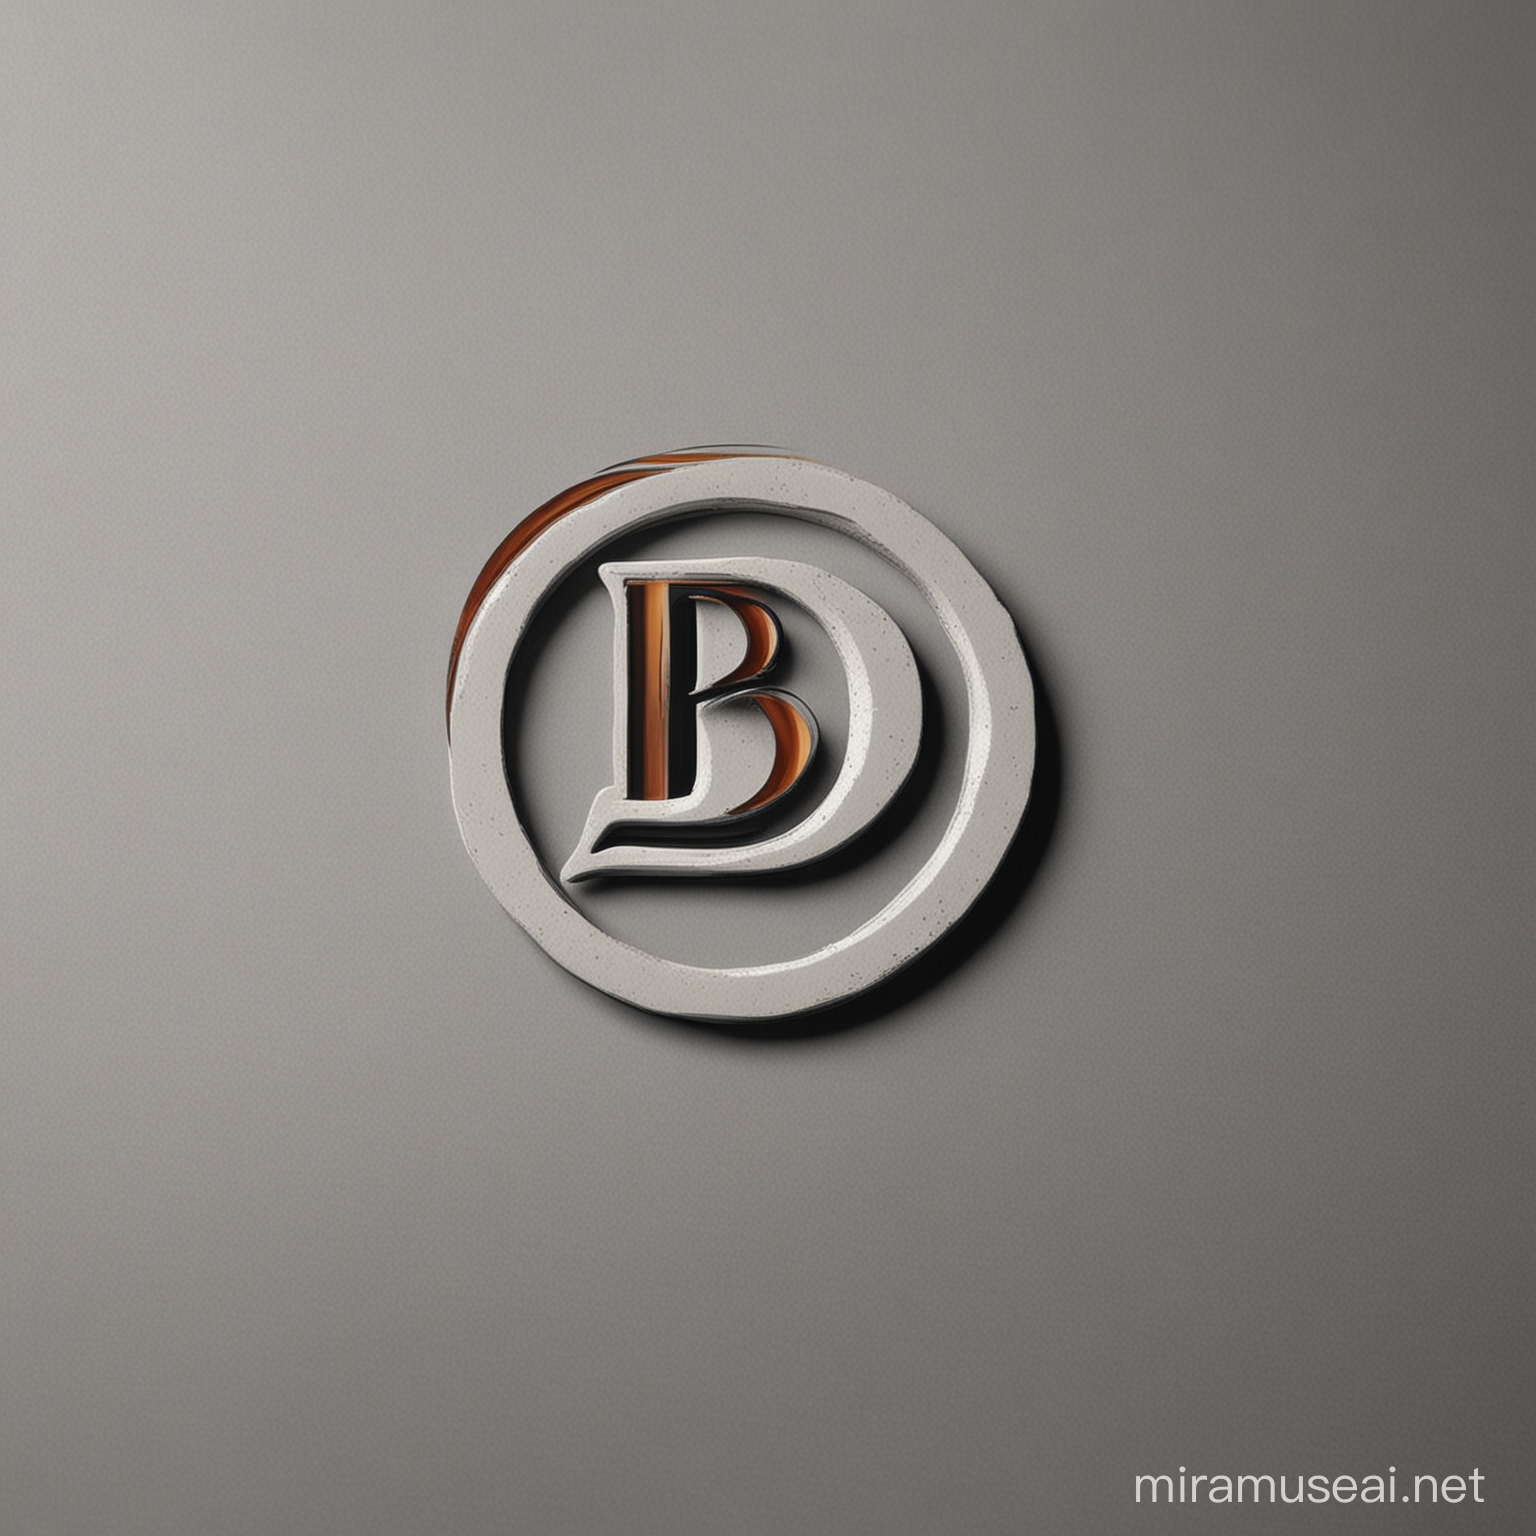 Elegant Decorative Logo Design with BD Letters